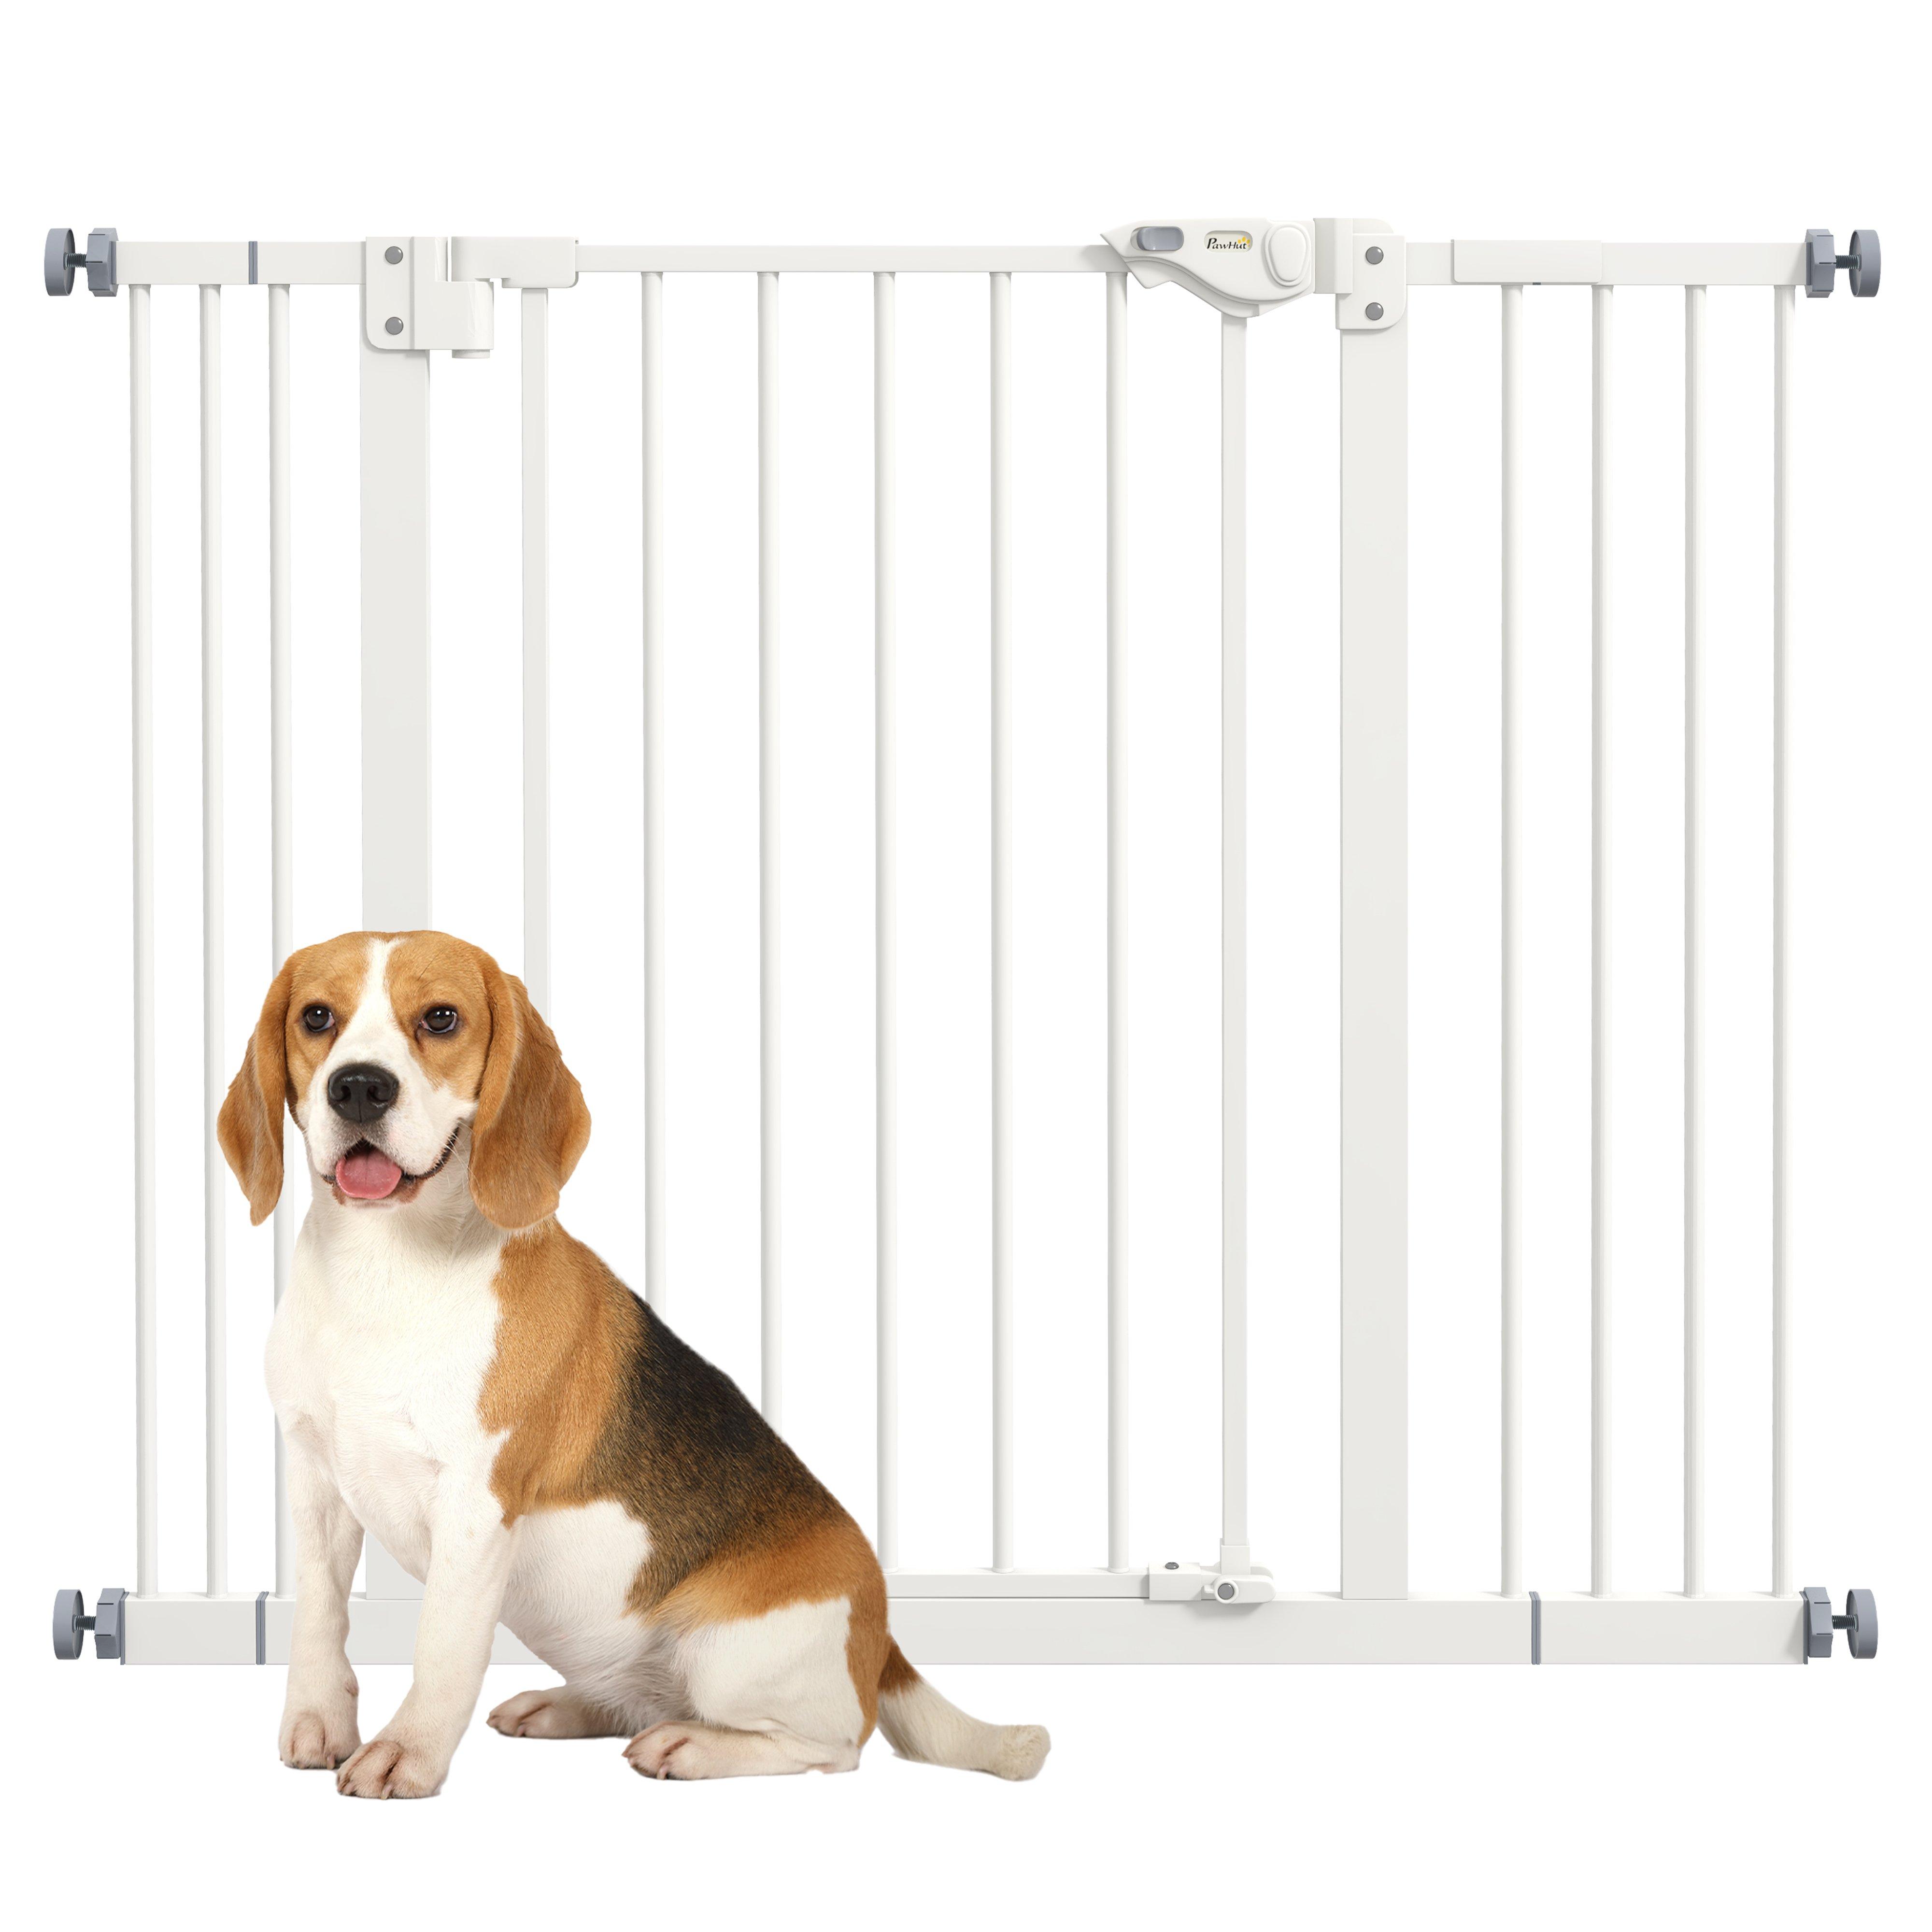 Dog Gate Stair Gate Pressure Fit Pets Barrier Auto Close for Doorway Hallway, 74-100cm Wide Adjustab